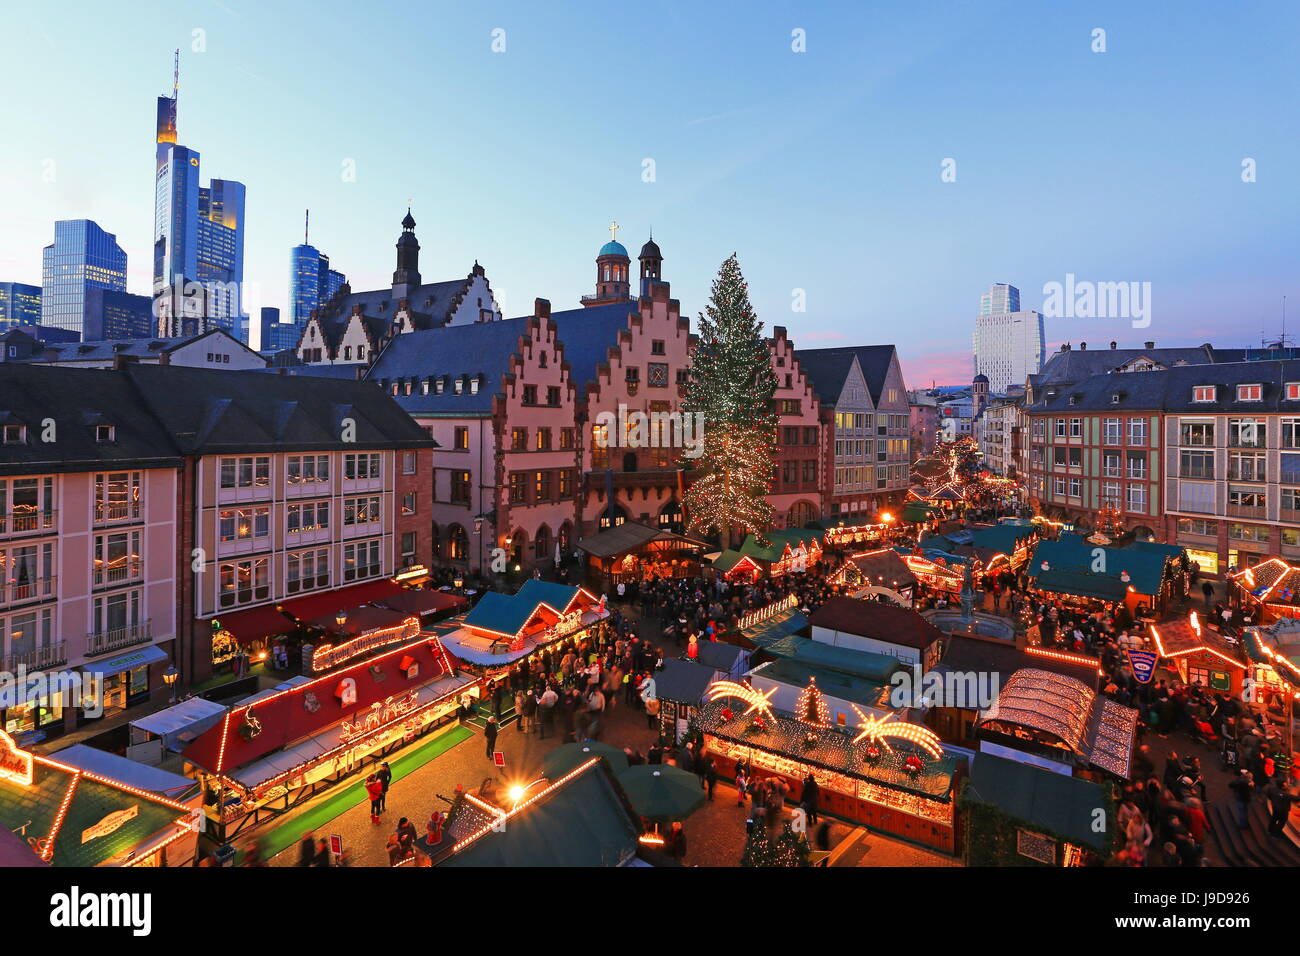 Feria de Navidad en la Plaza Roemerberg, Frankfurt am Main, Hesse, Alemania, Europa Foto de stock